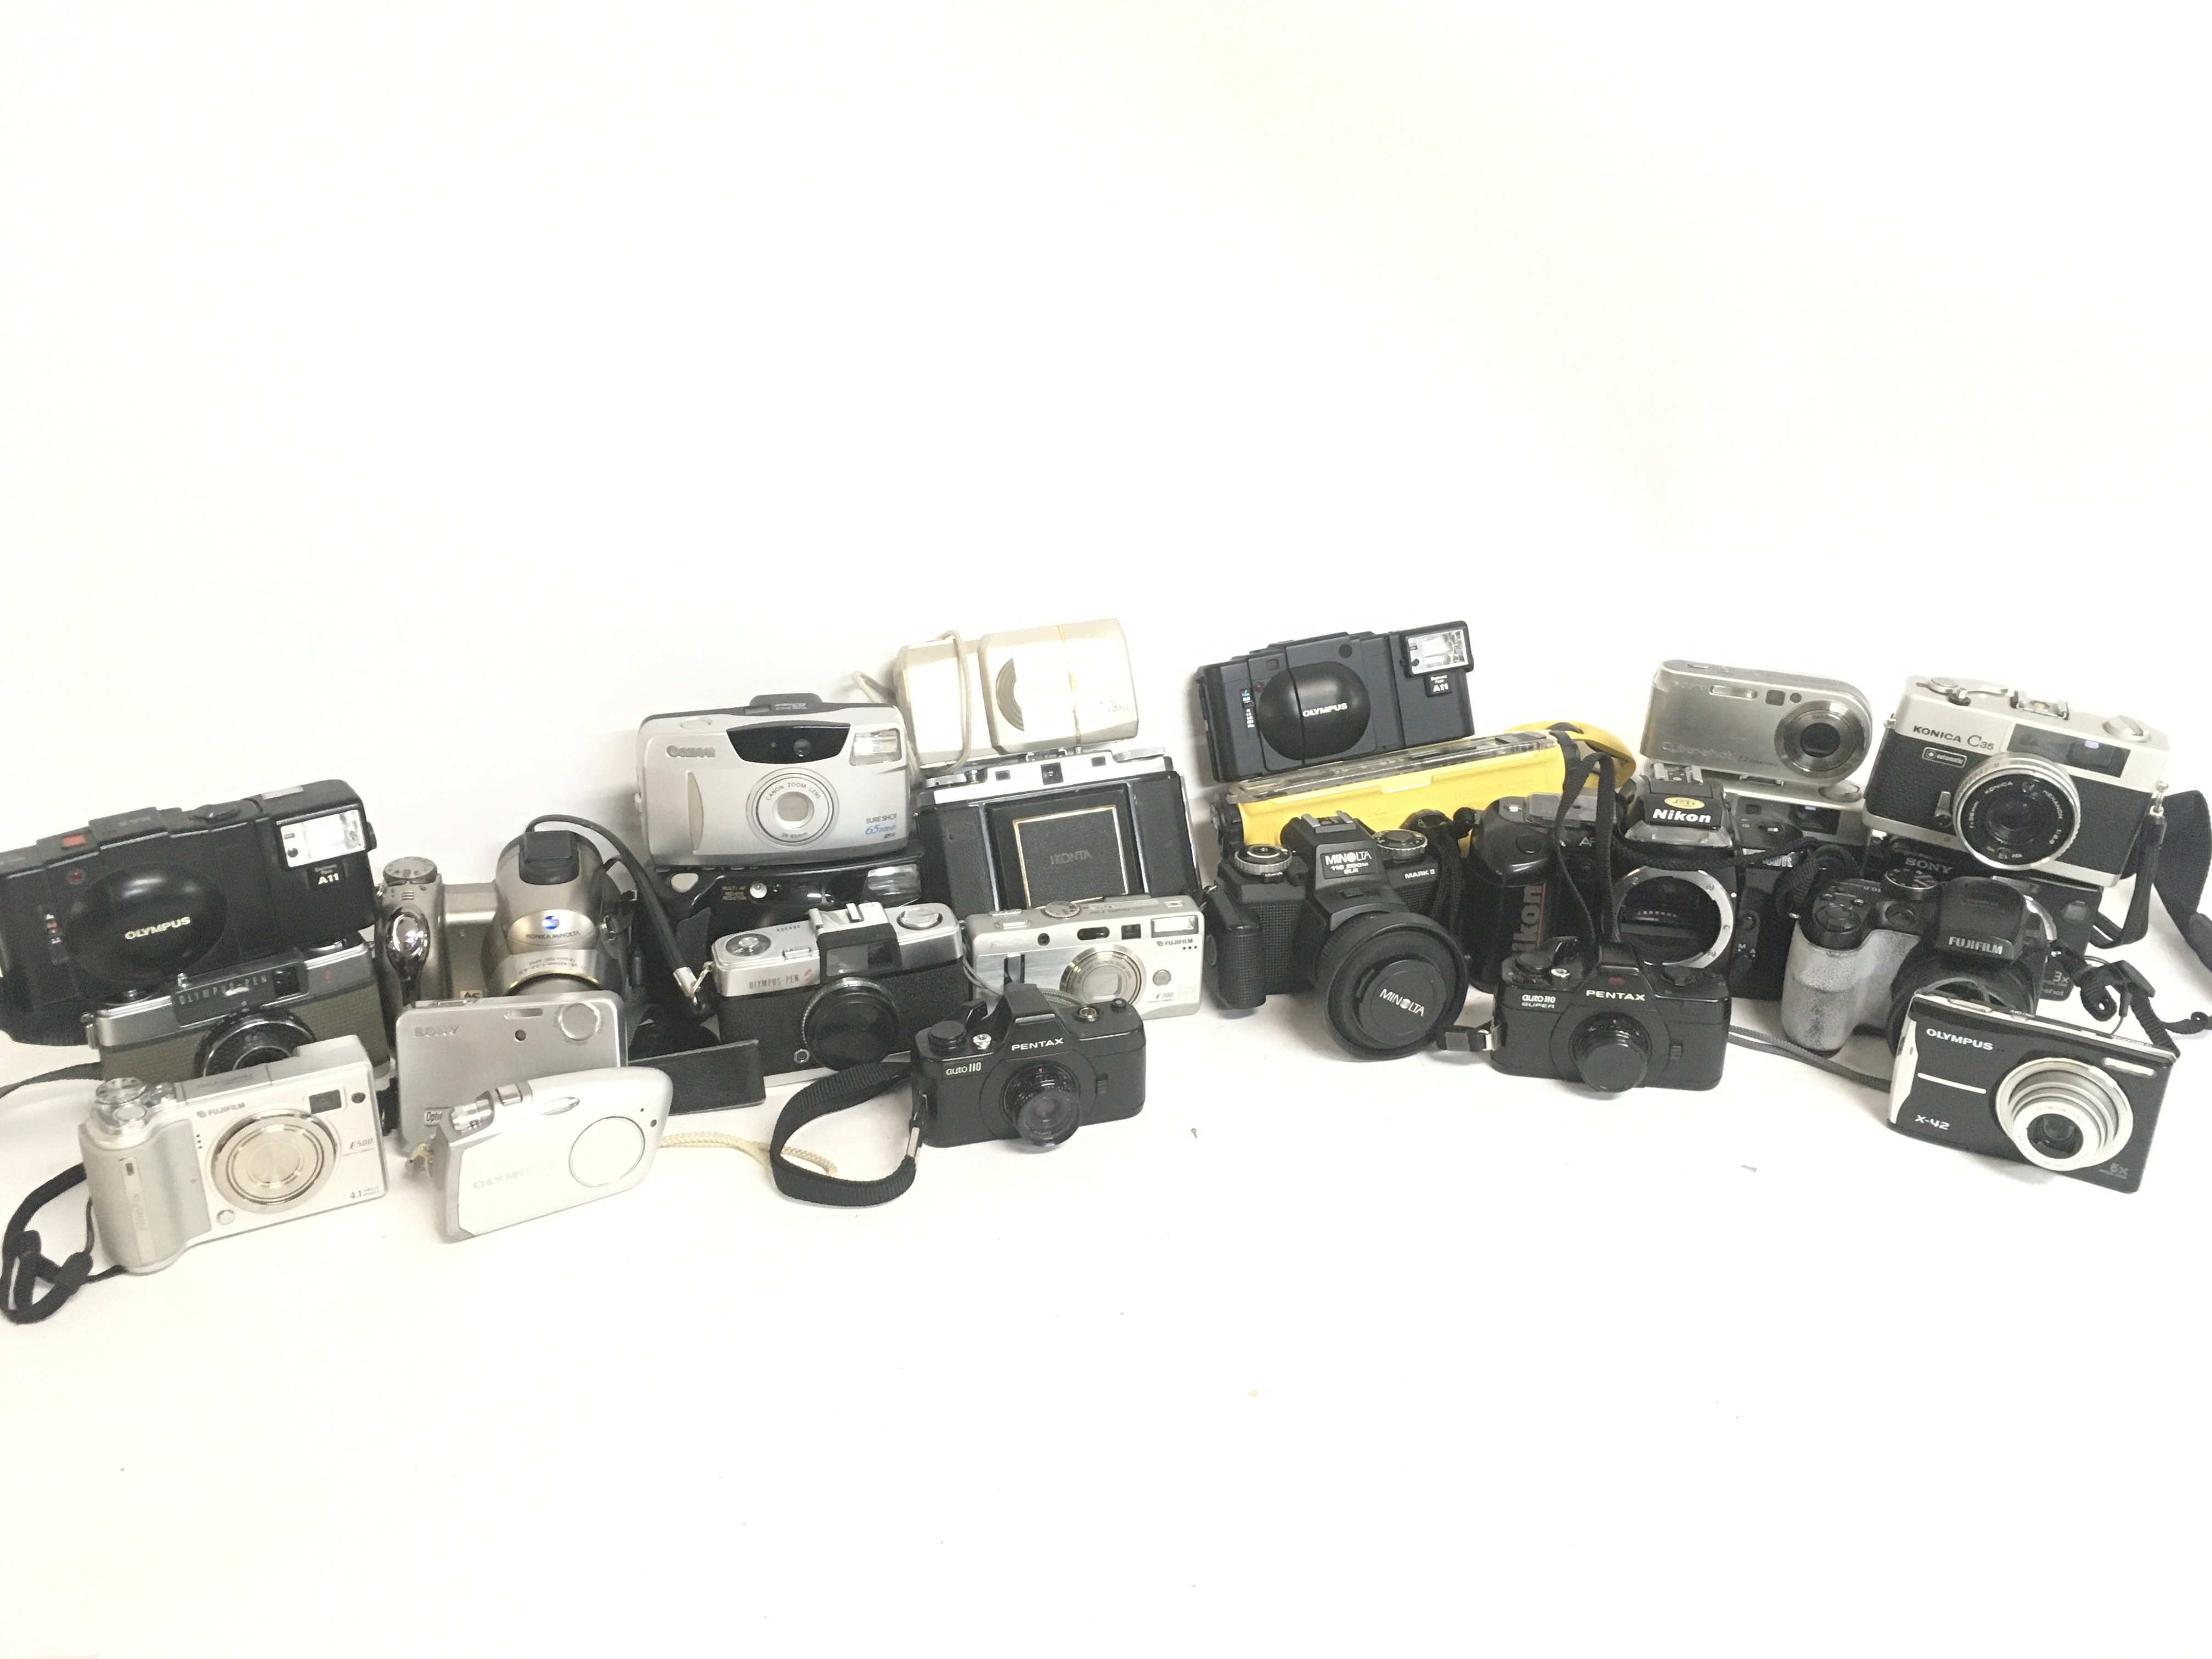 Vintage cameras including Olympus, Pentax, Minolta